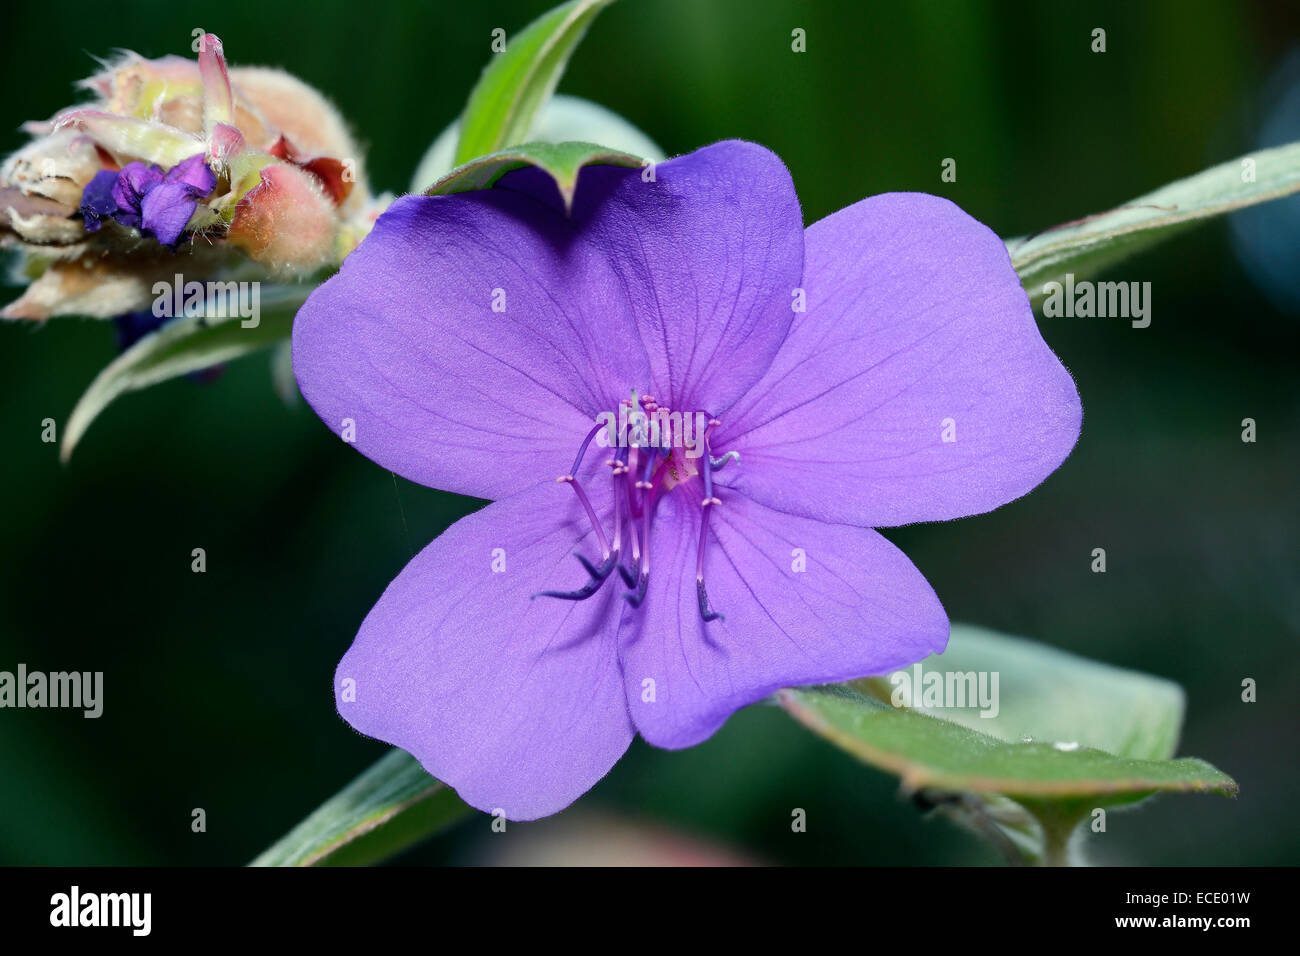 Princess Flower or Glory Bush - Tibouchina urvilleana Stock Photo